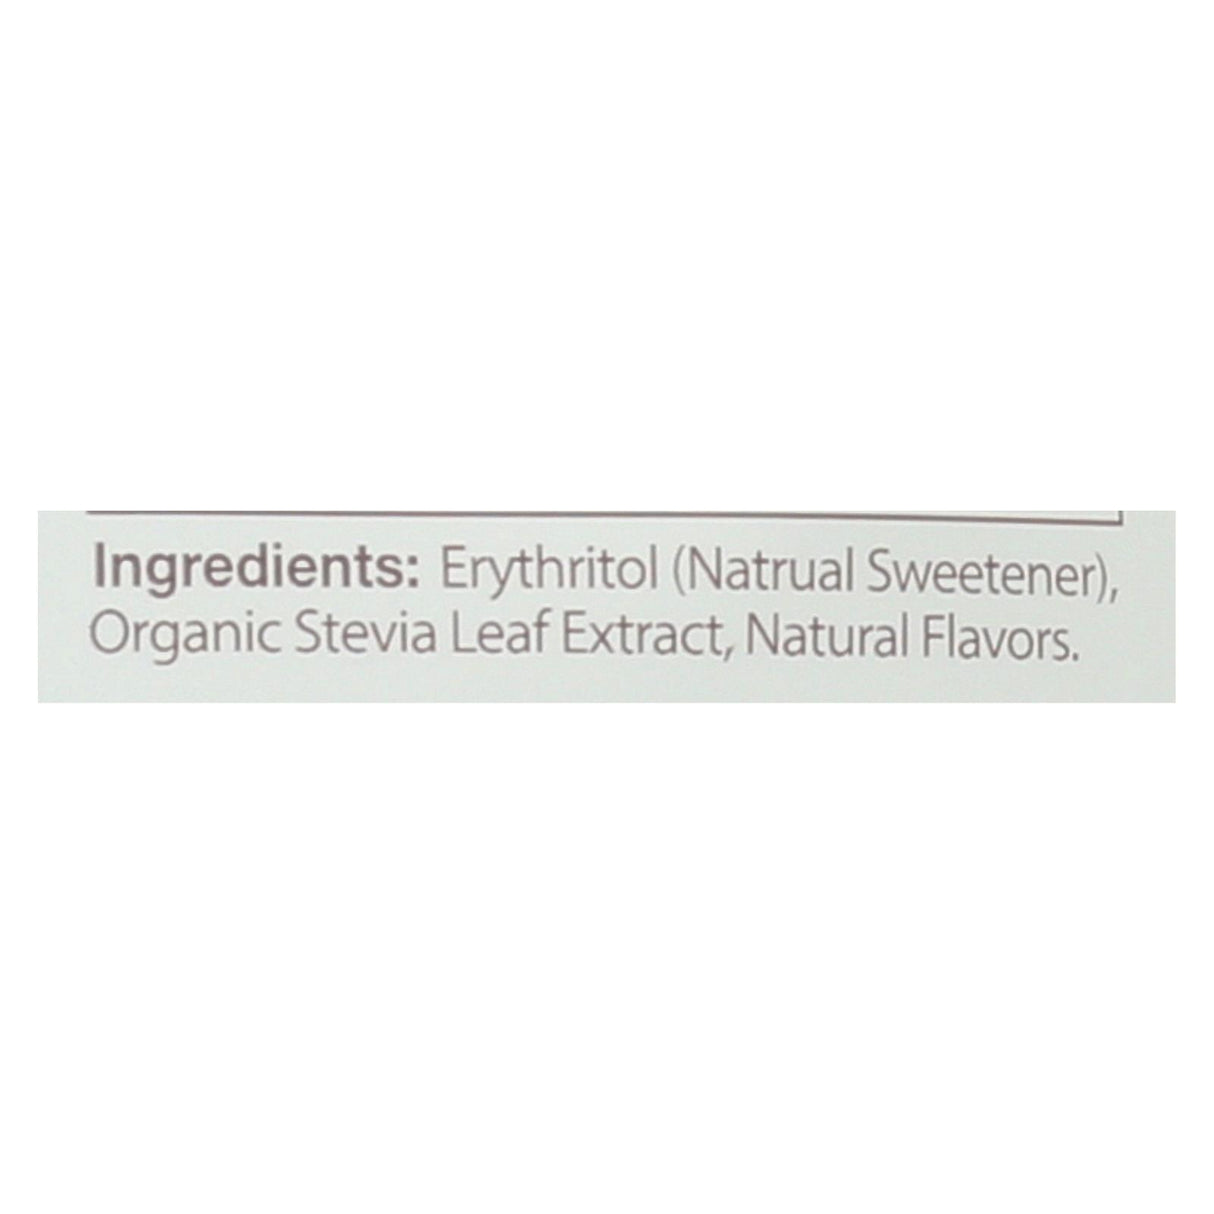 Zsweet Zero Calorie Sugar-Free Natural Sweetener (Pack of 6) - 1.5 Lb - Cozy Farm 